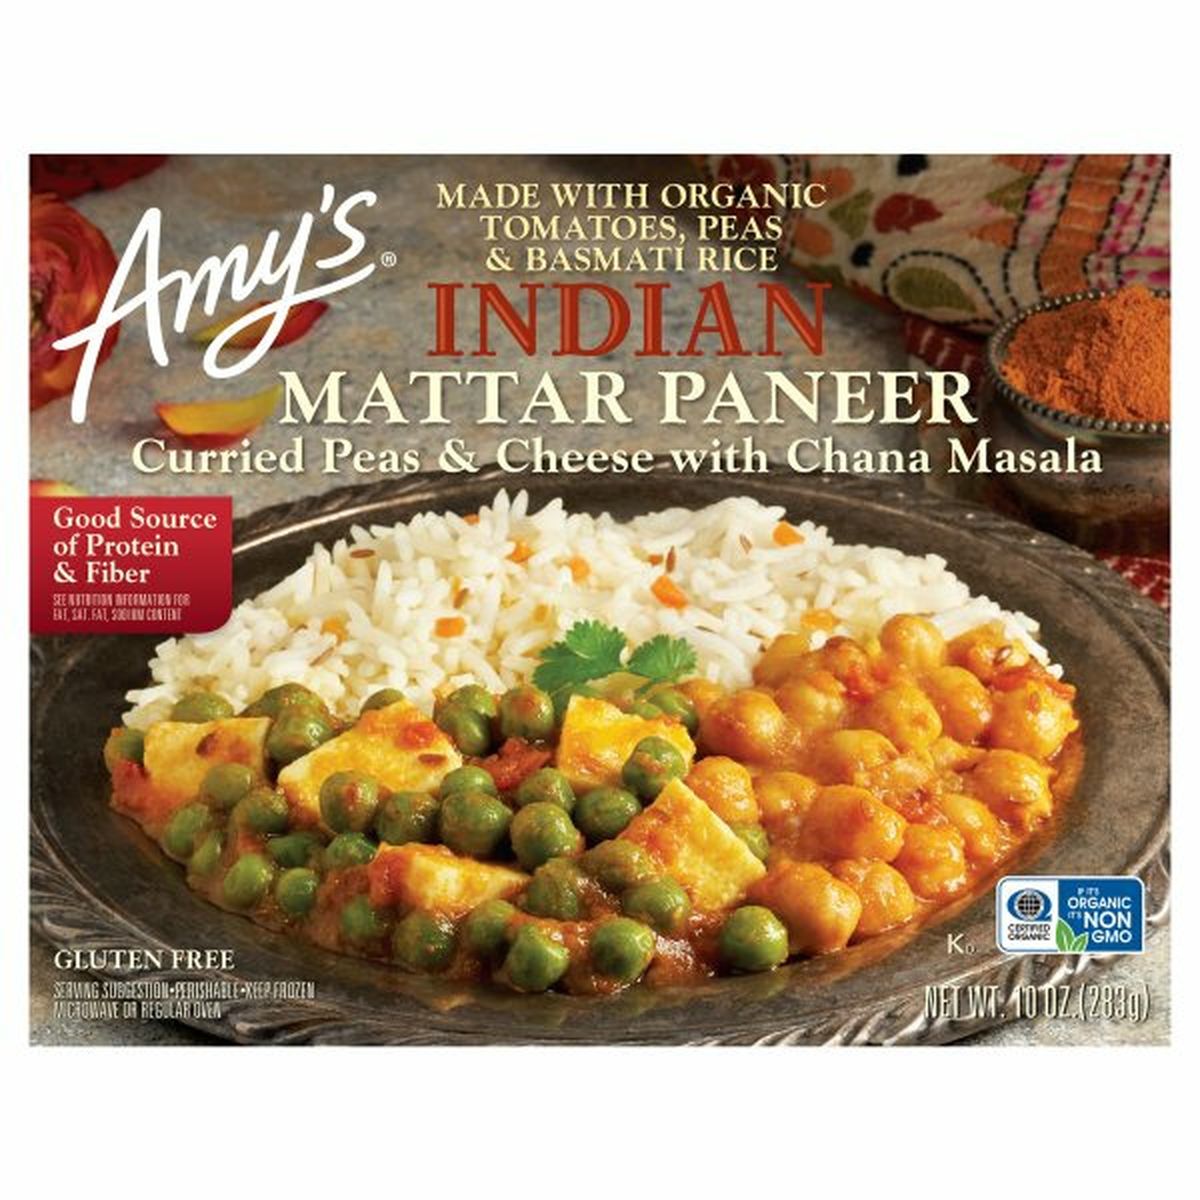 Calories in Amy's Kitchen Mattar Paneer, Indian